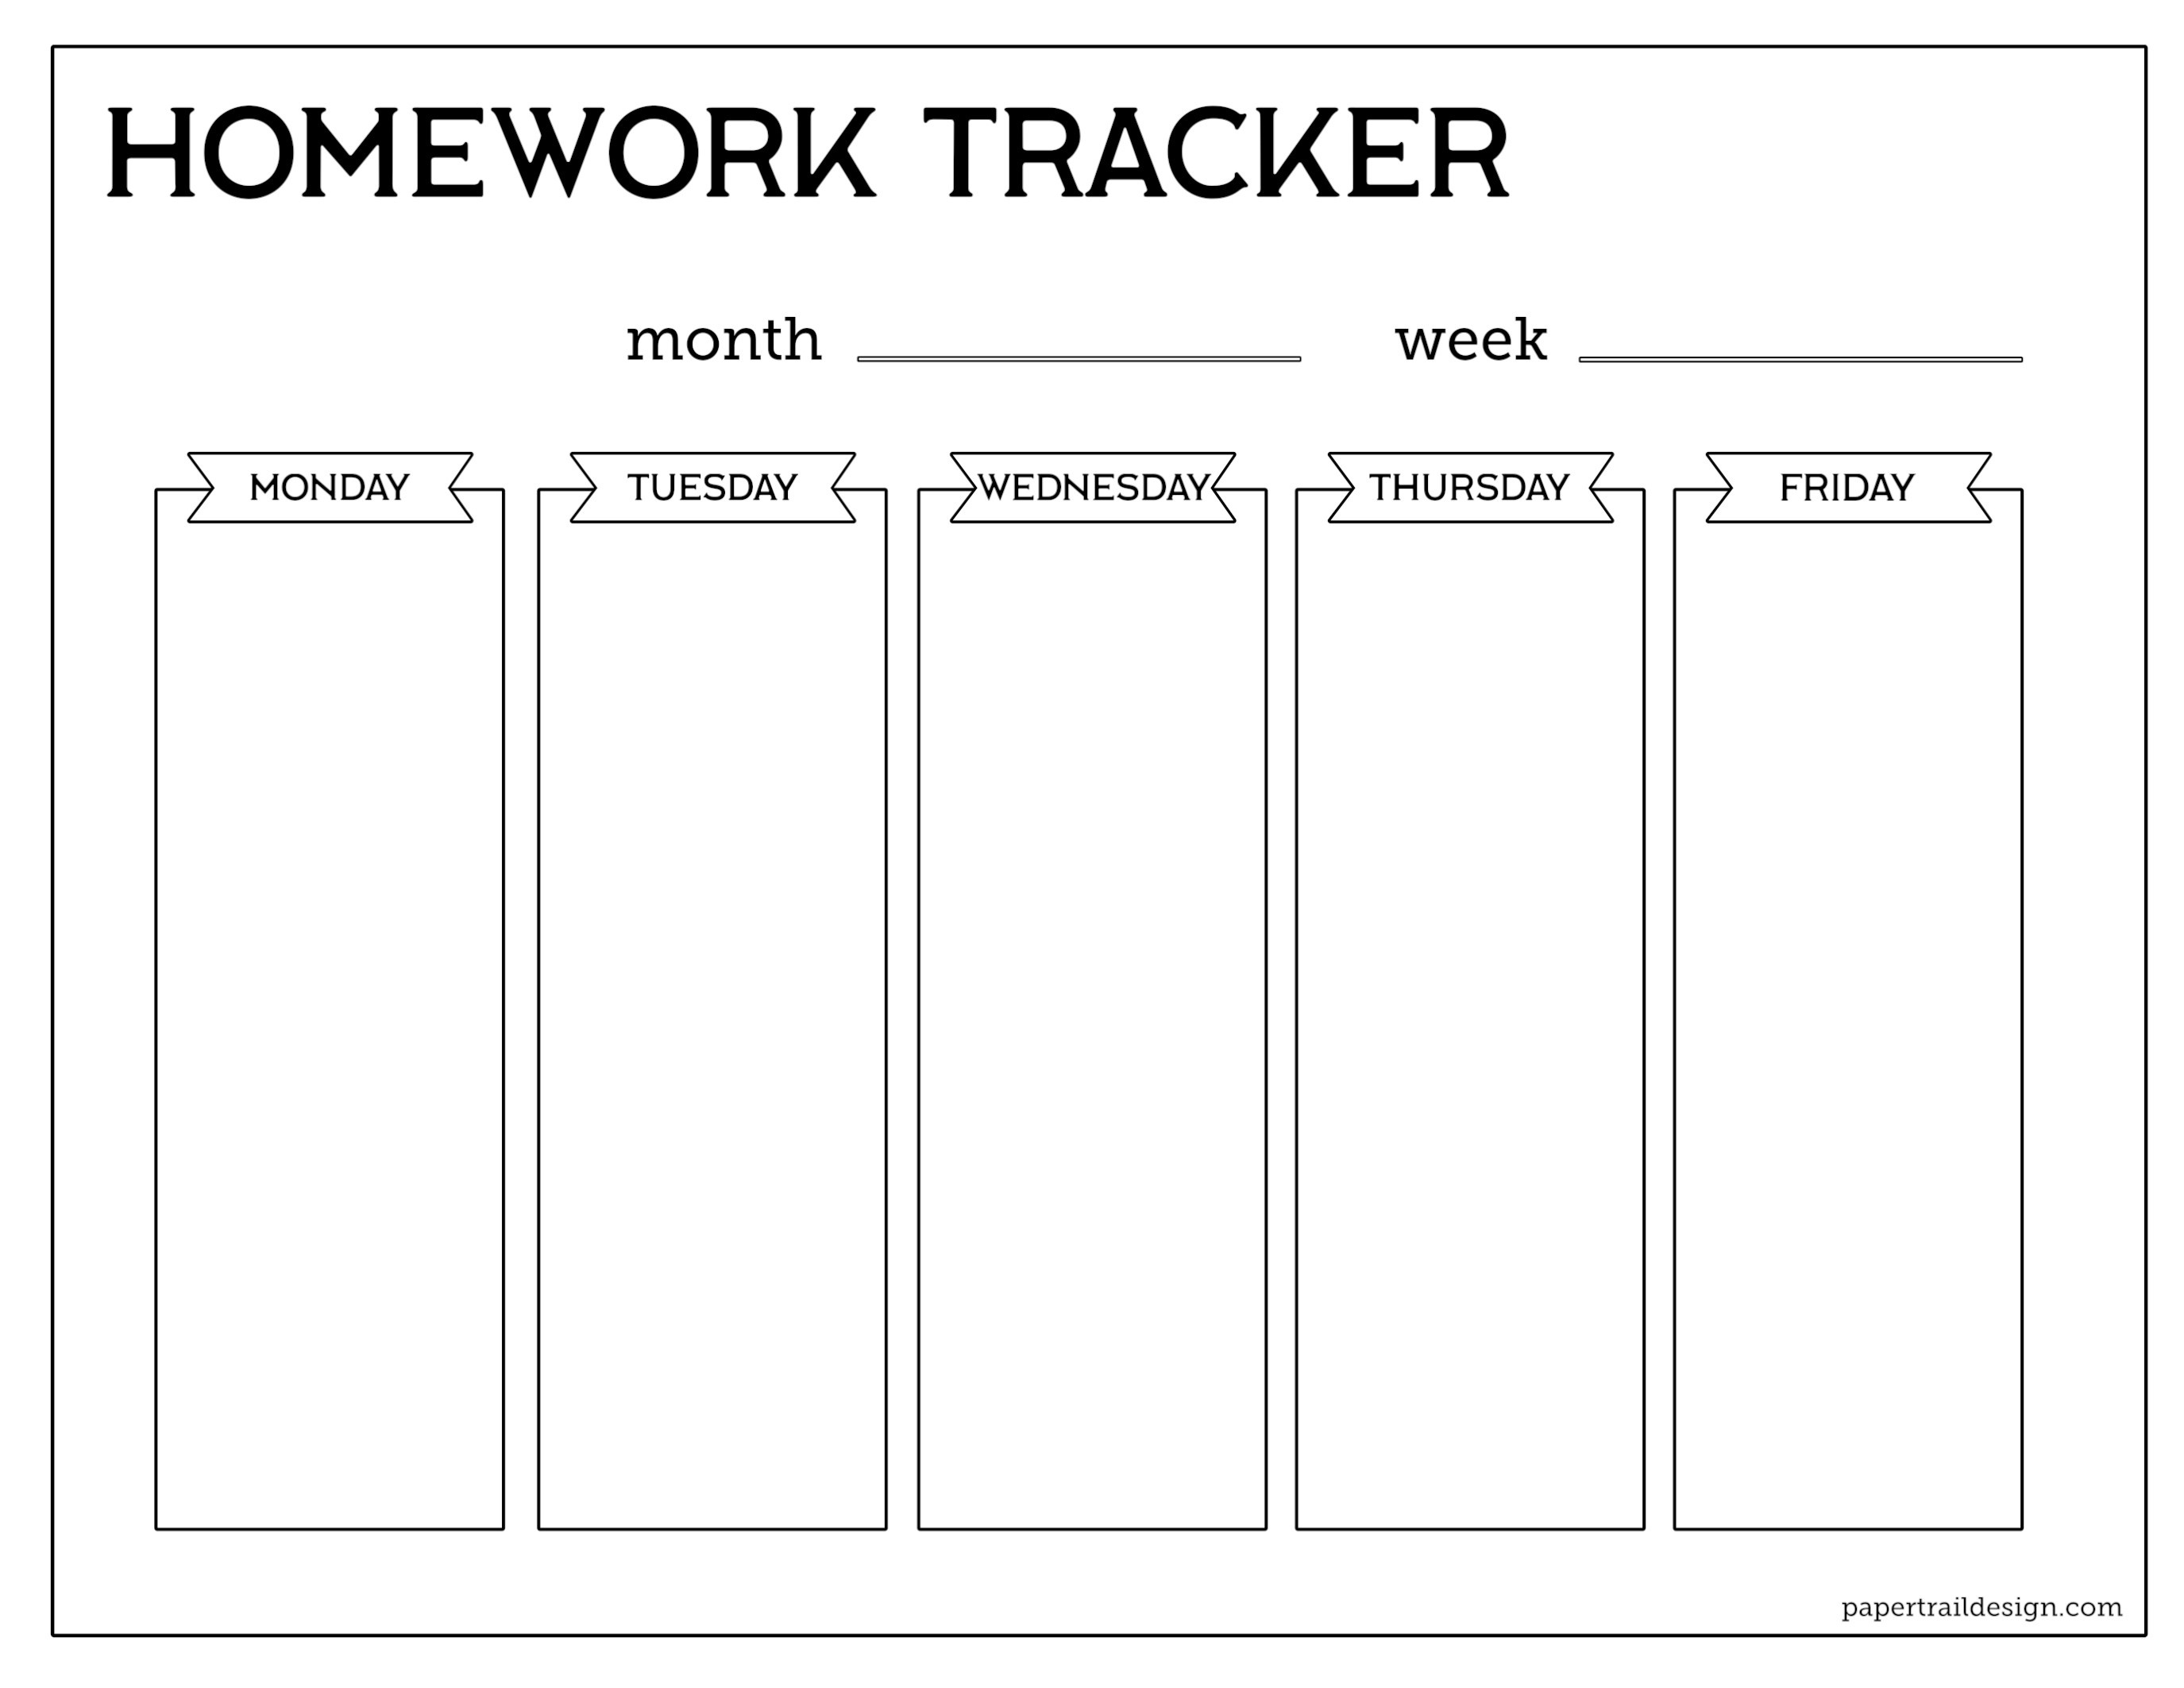 homework template for kindergarten